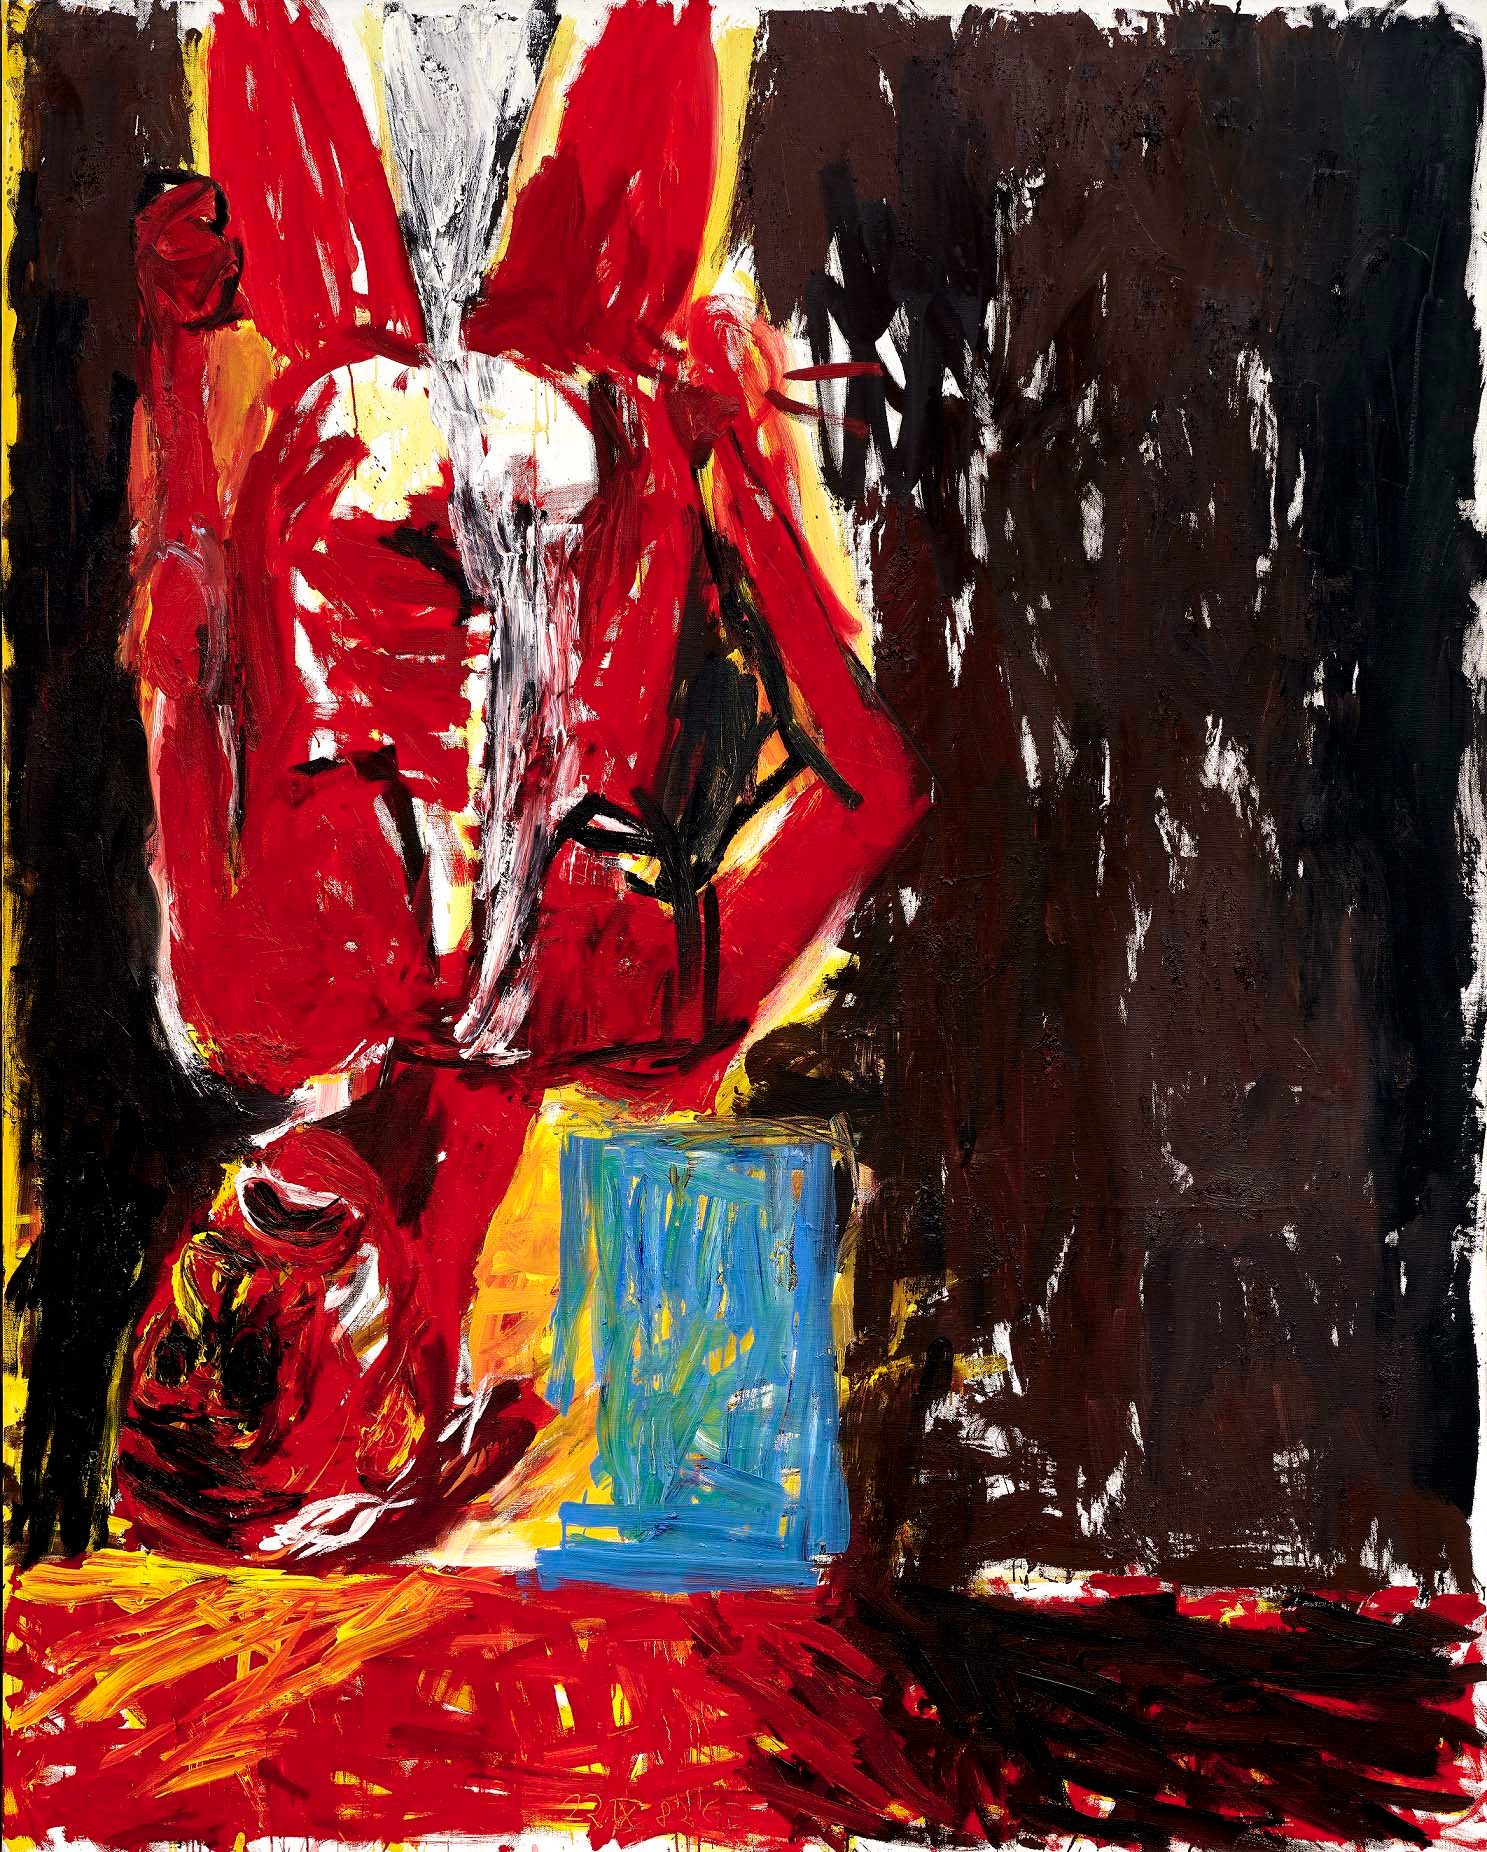 Georg Baselitz, “Das letzte Selbstbildnis I (The Last Self-Portrait I)” (1982). Huile sur toile, 250 x 200 cm. Estimation : £4.5 - 5.5 million